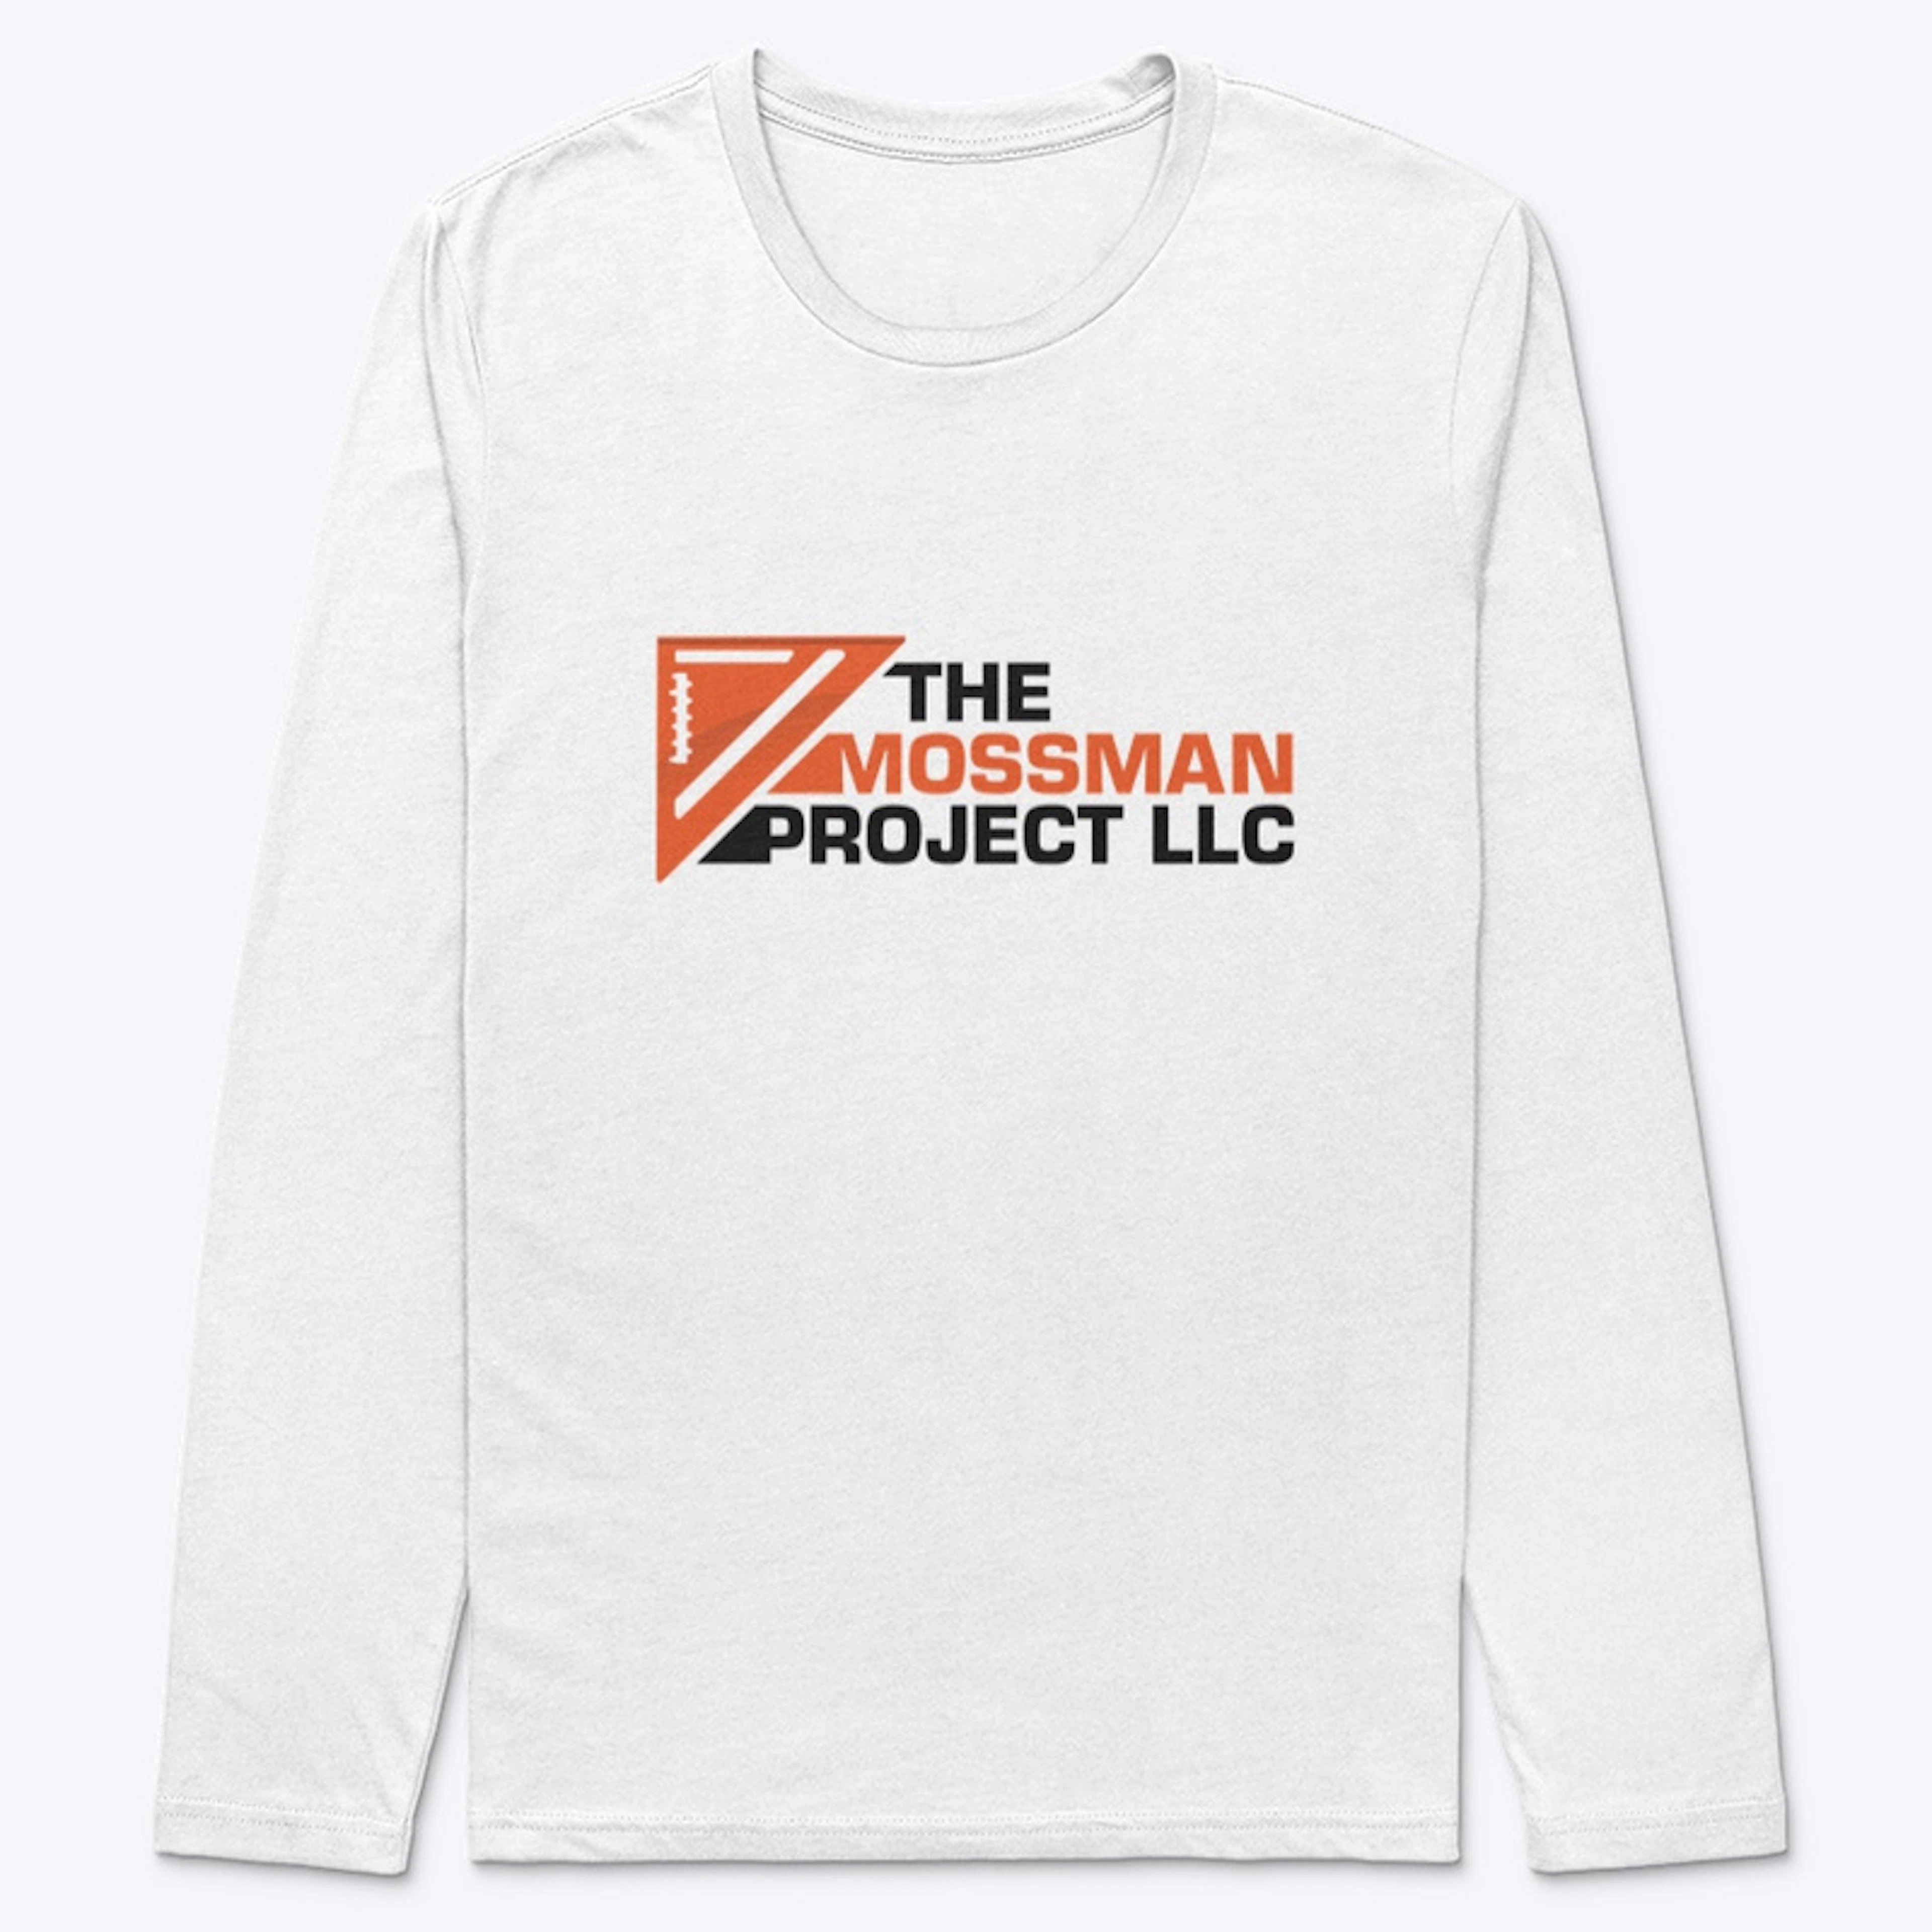 The Mossman Project LLC